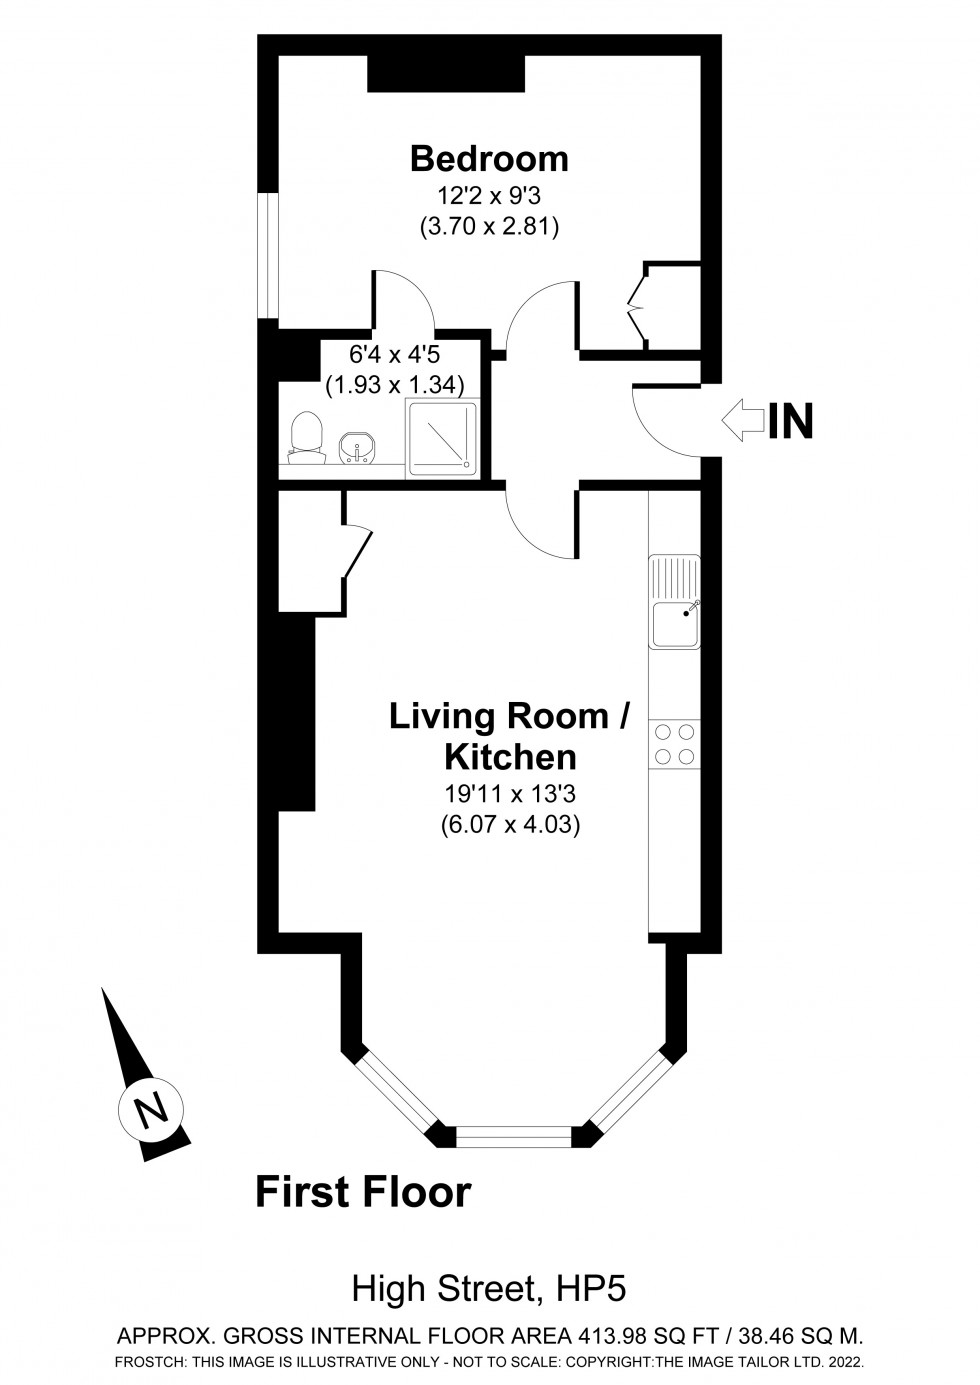 Floorplan for Chesham, , HP5